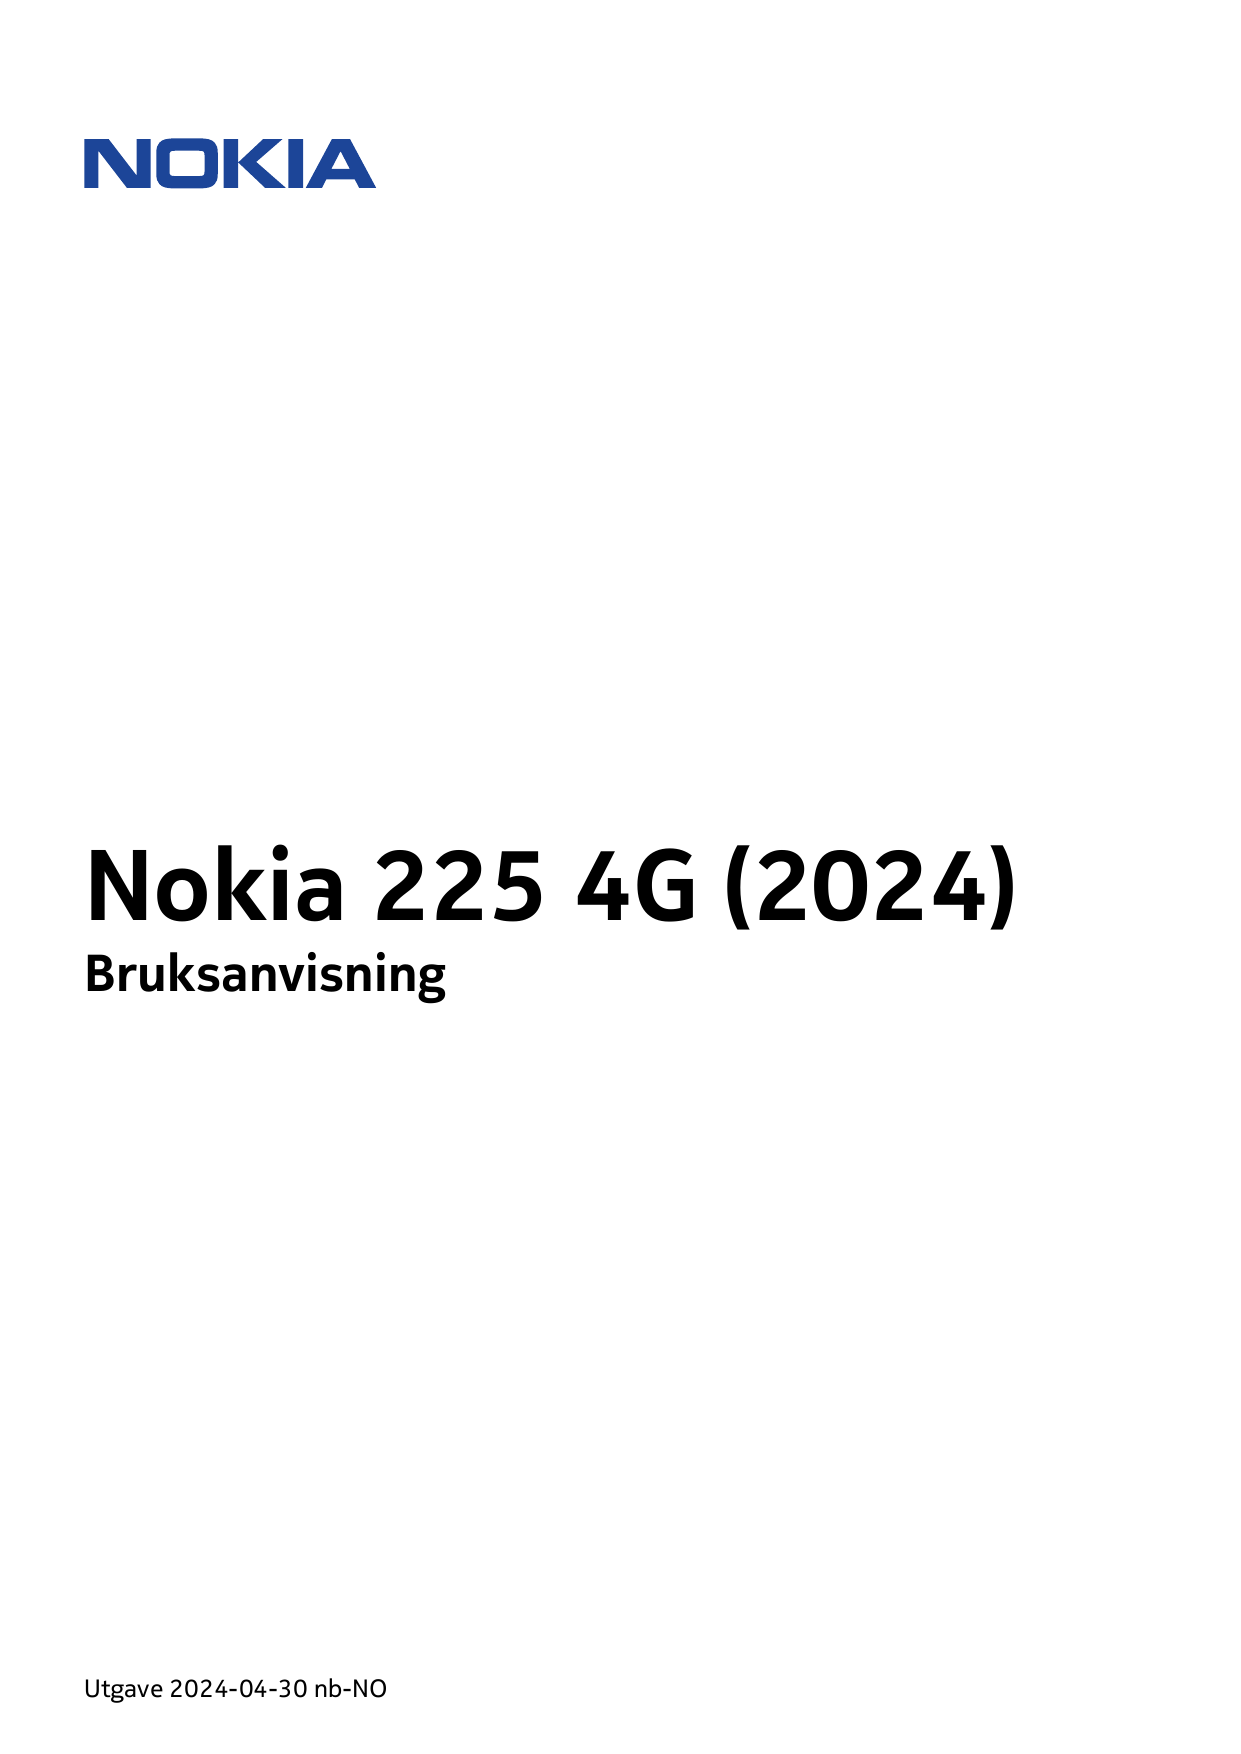 Nokia 225 4G (2024)BruksanvisningUtgave 2024-04-30 nb-NO